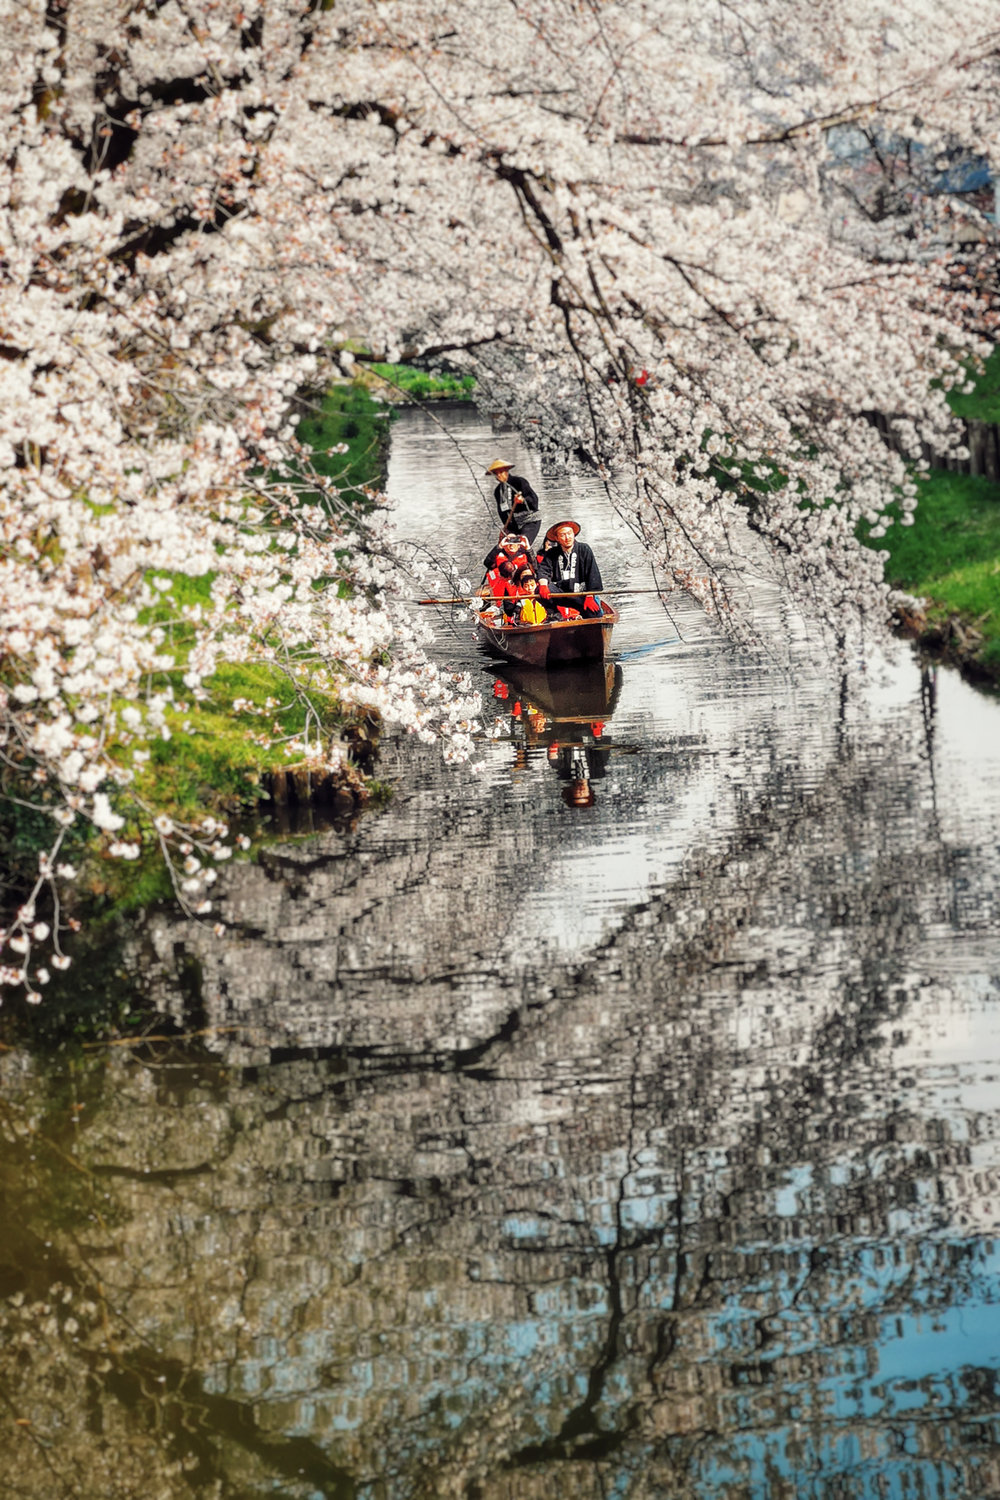  Cherry Blossom River, Kawagoe. Huawei P20 Pro (80mm cam) 